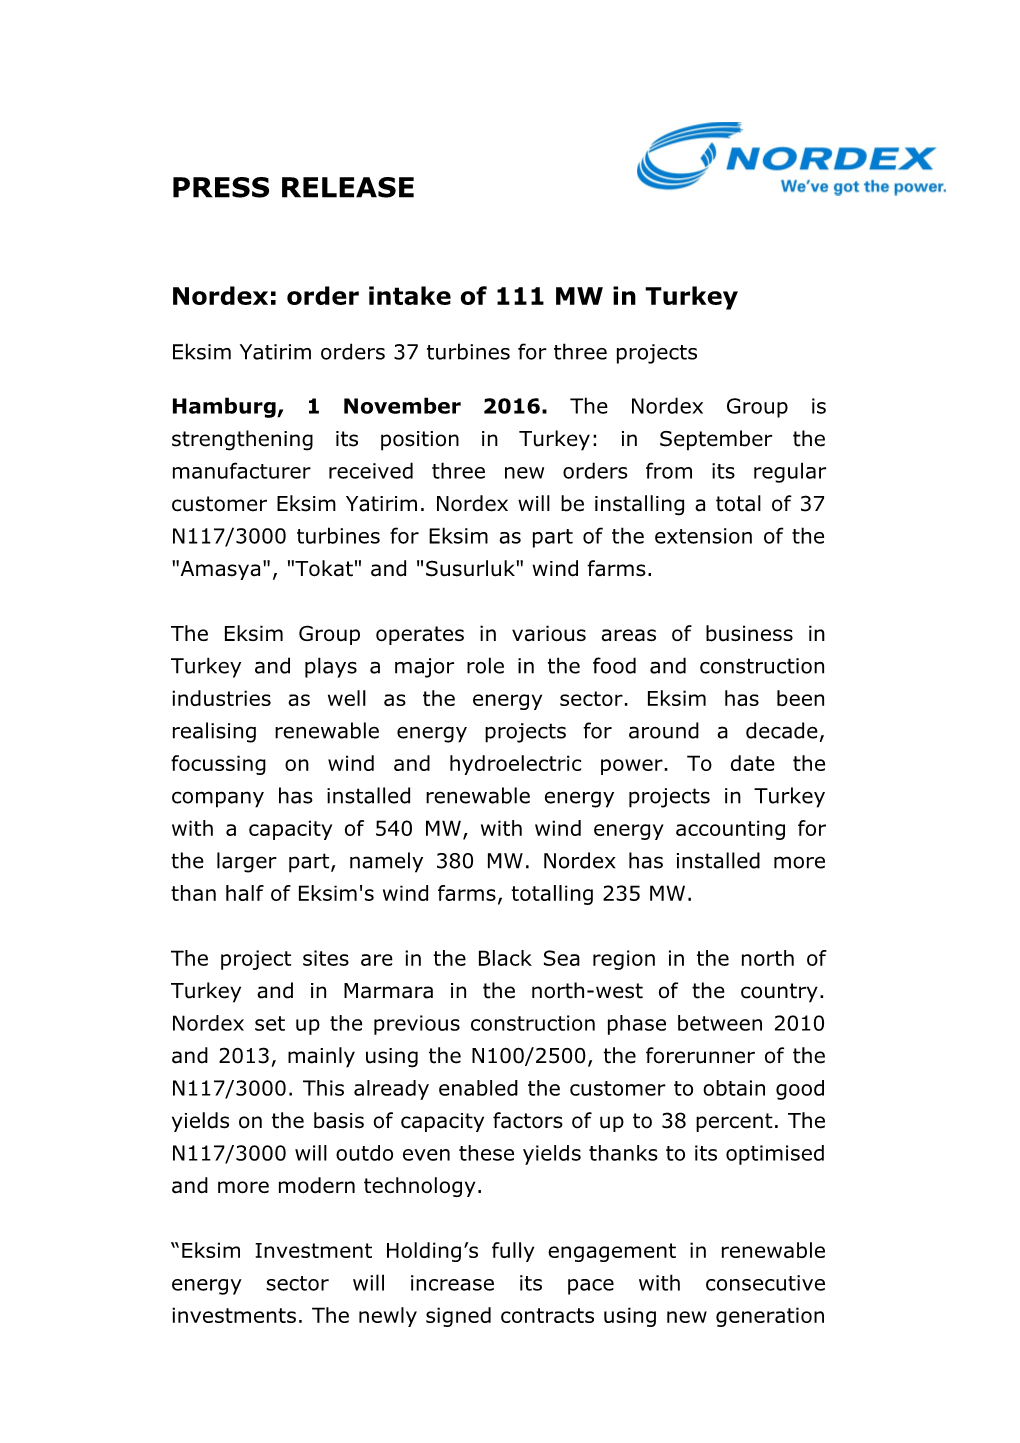 Nordex: Order Intake of 111 MW in Turkey